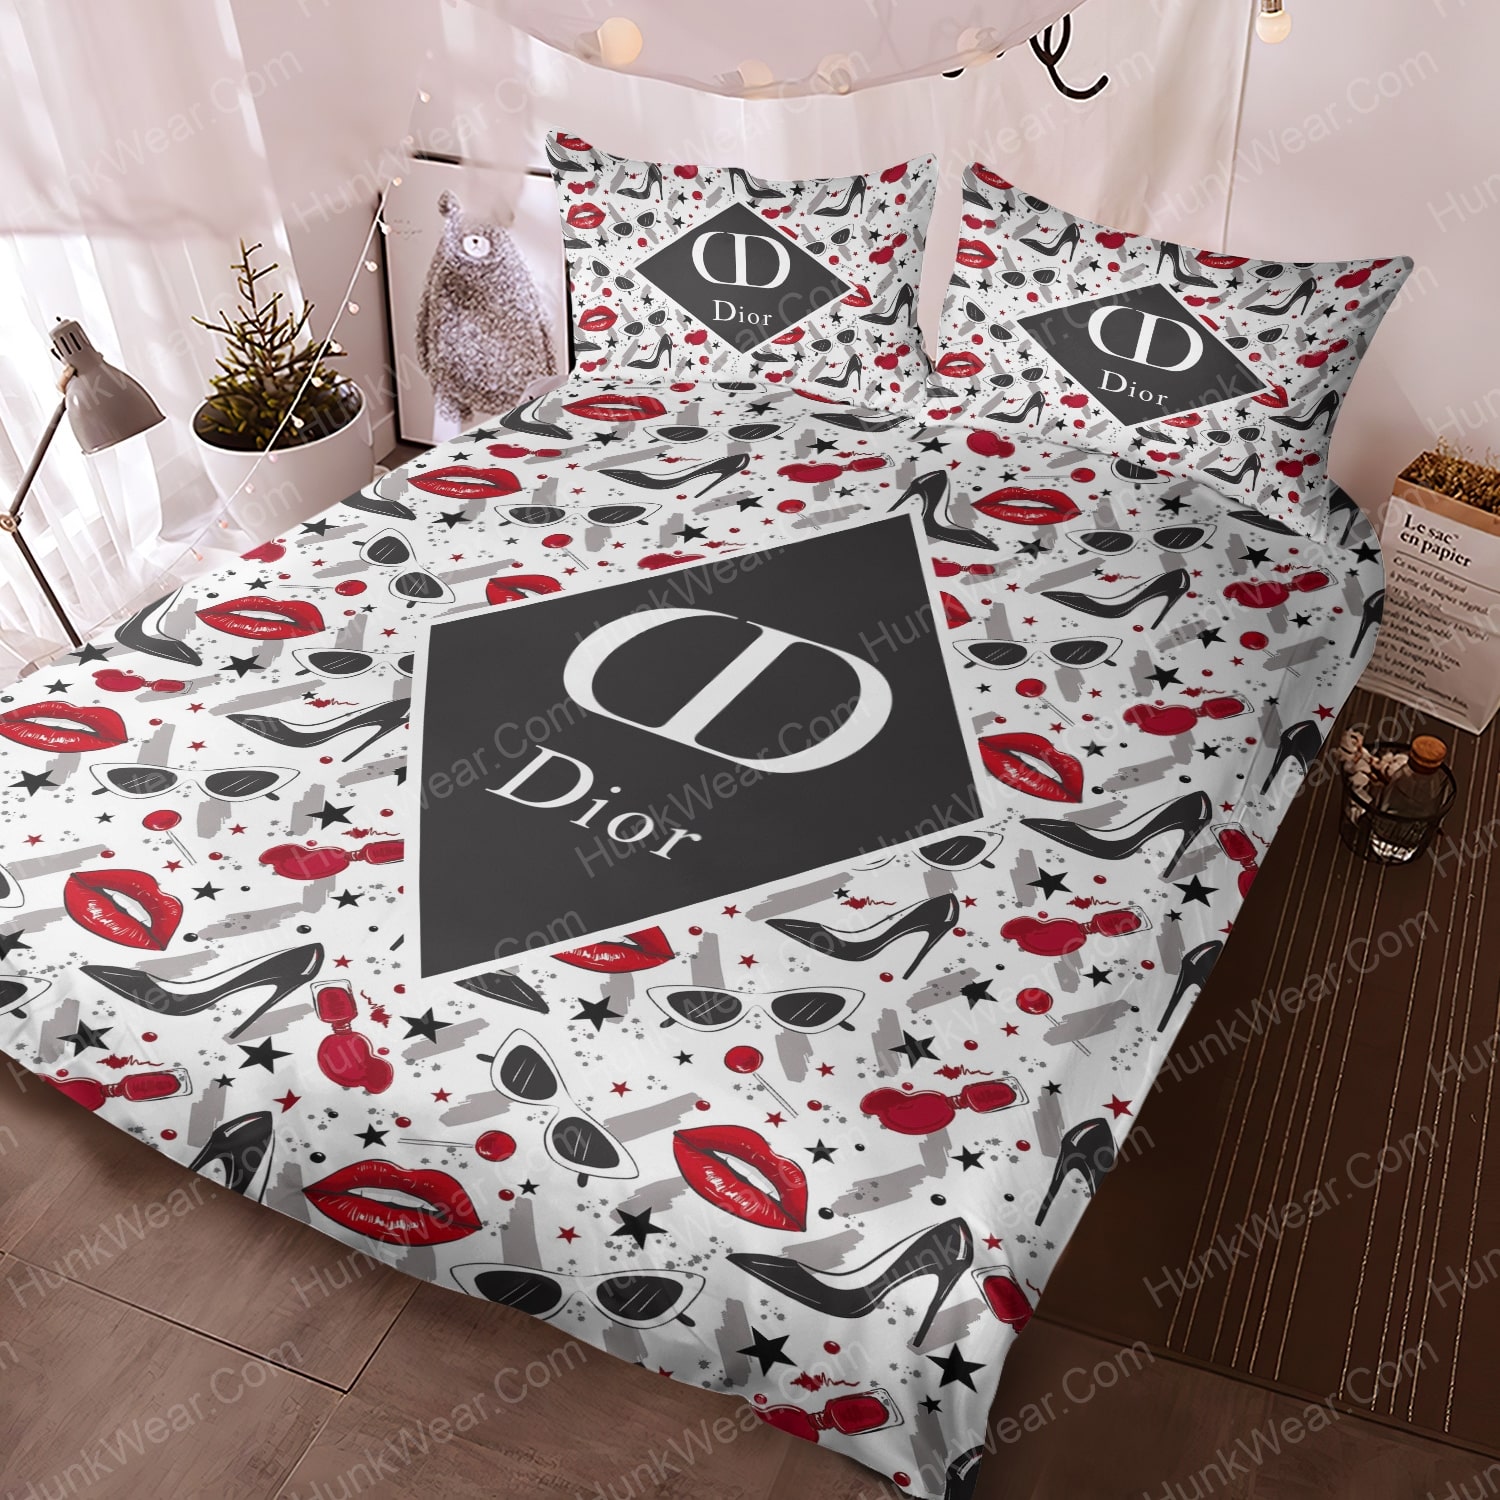 dior heels glasses and red lips pattern bed set bedding set 1